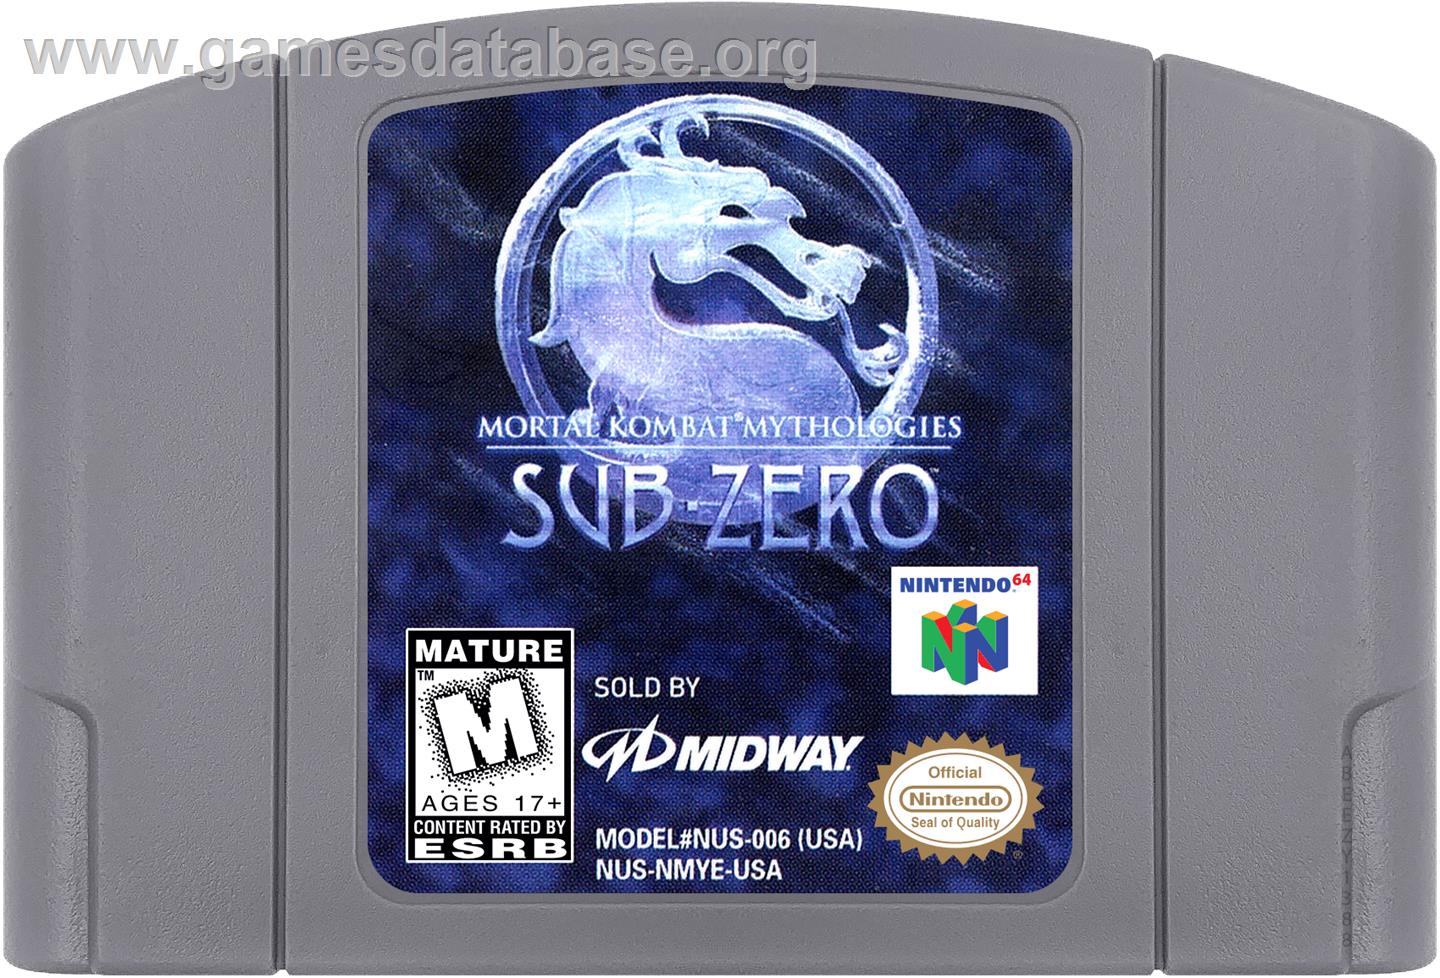 Mortal Kombat Mythologies: Sub-Zero - Nintendo N64 - Artwork - Cartridge